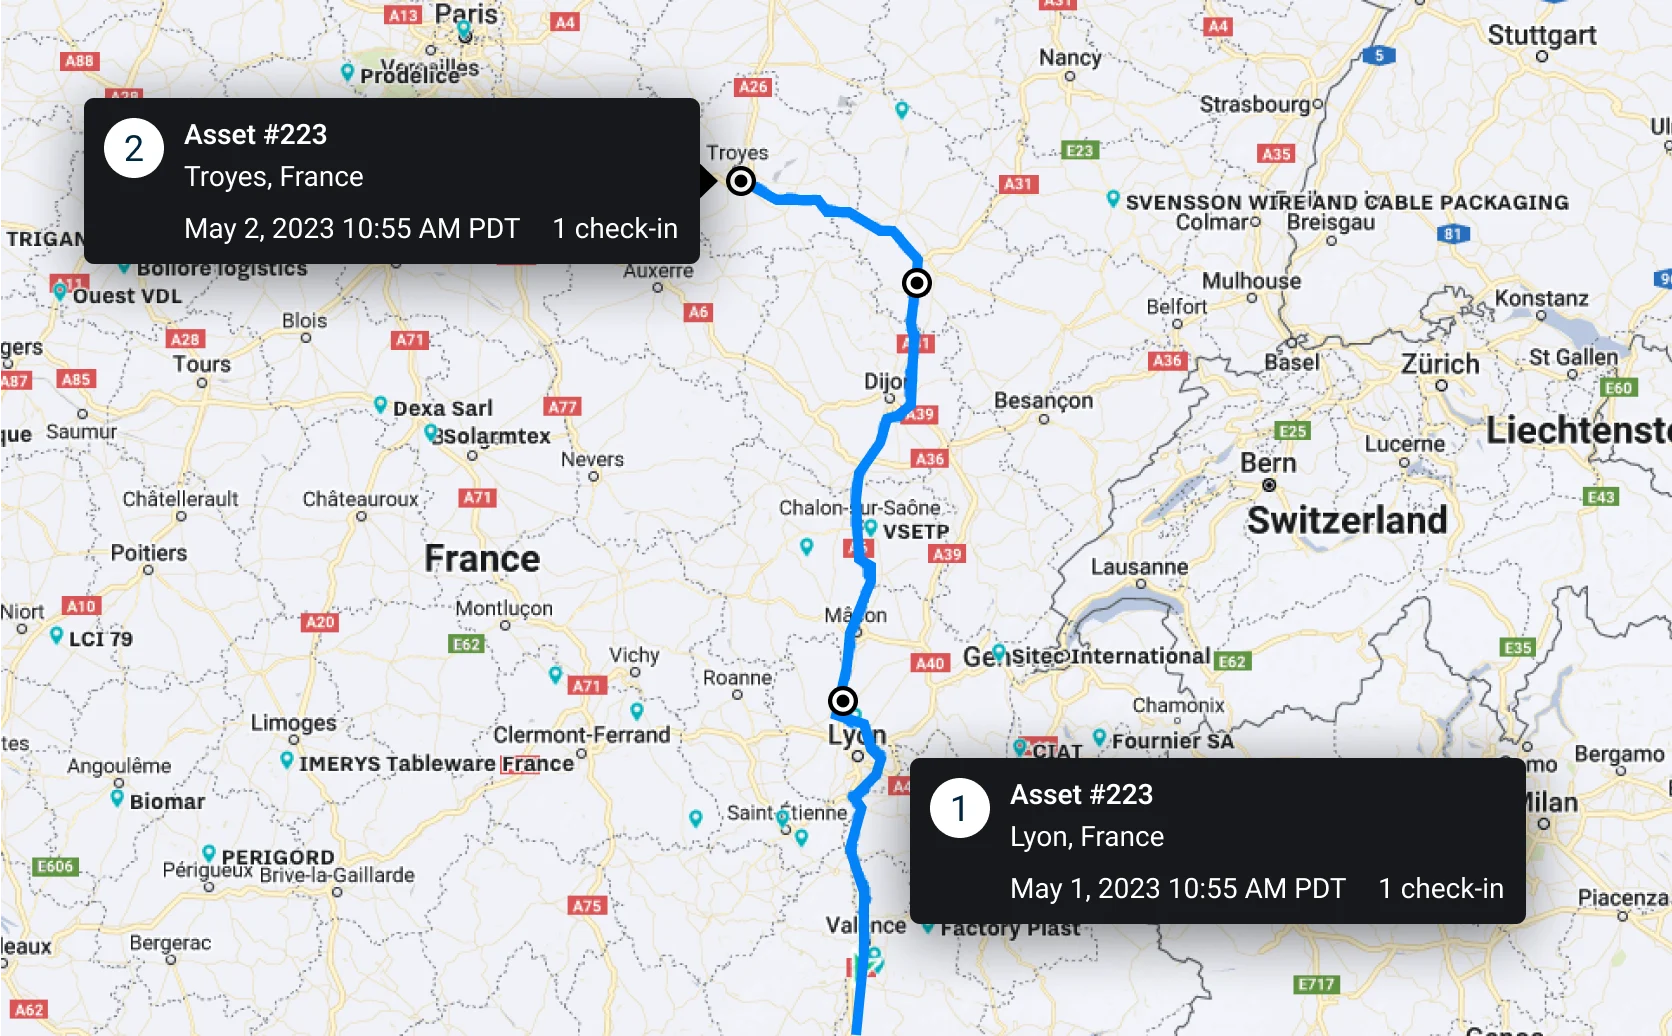 Screenshot of Samsara dashboard showing where an asset is located on Google maps.